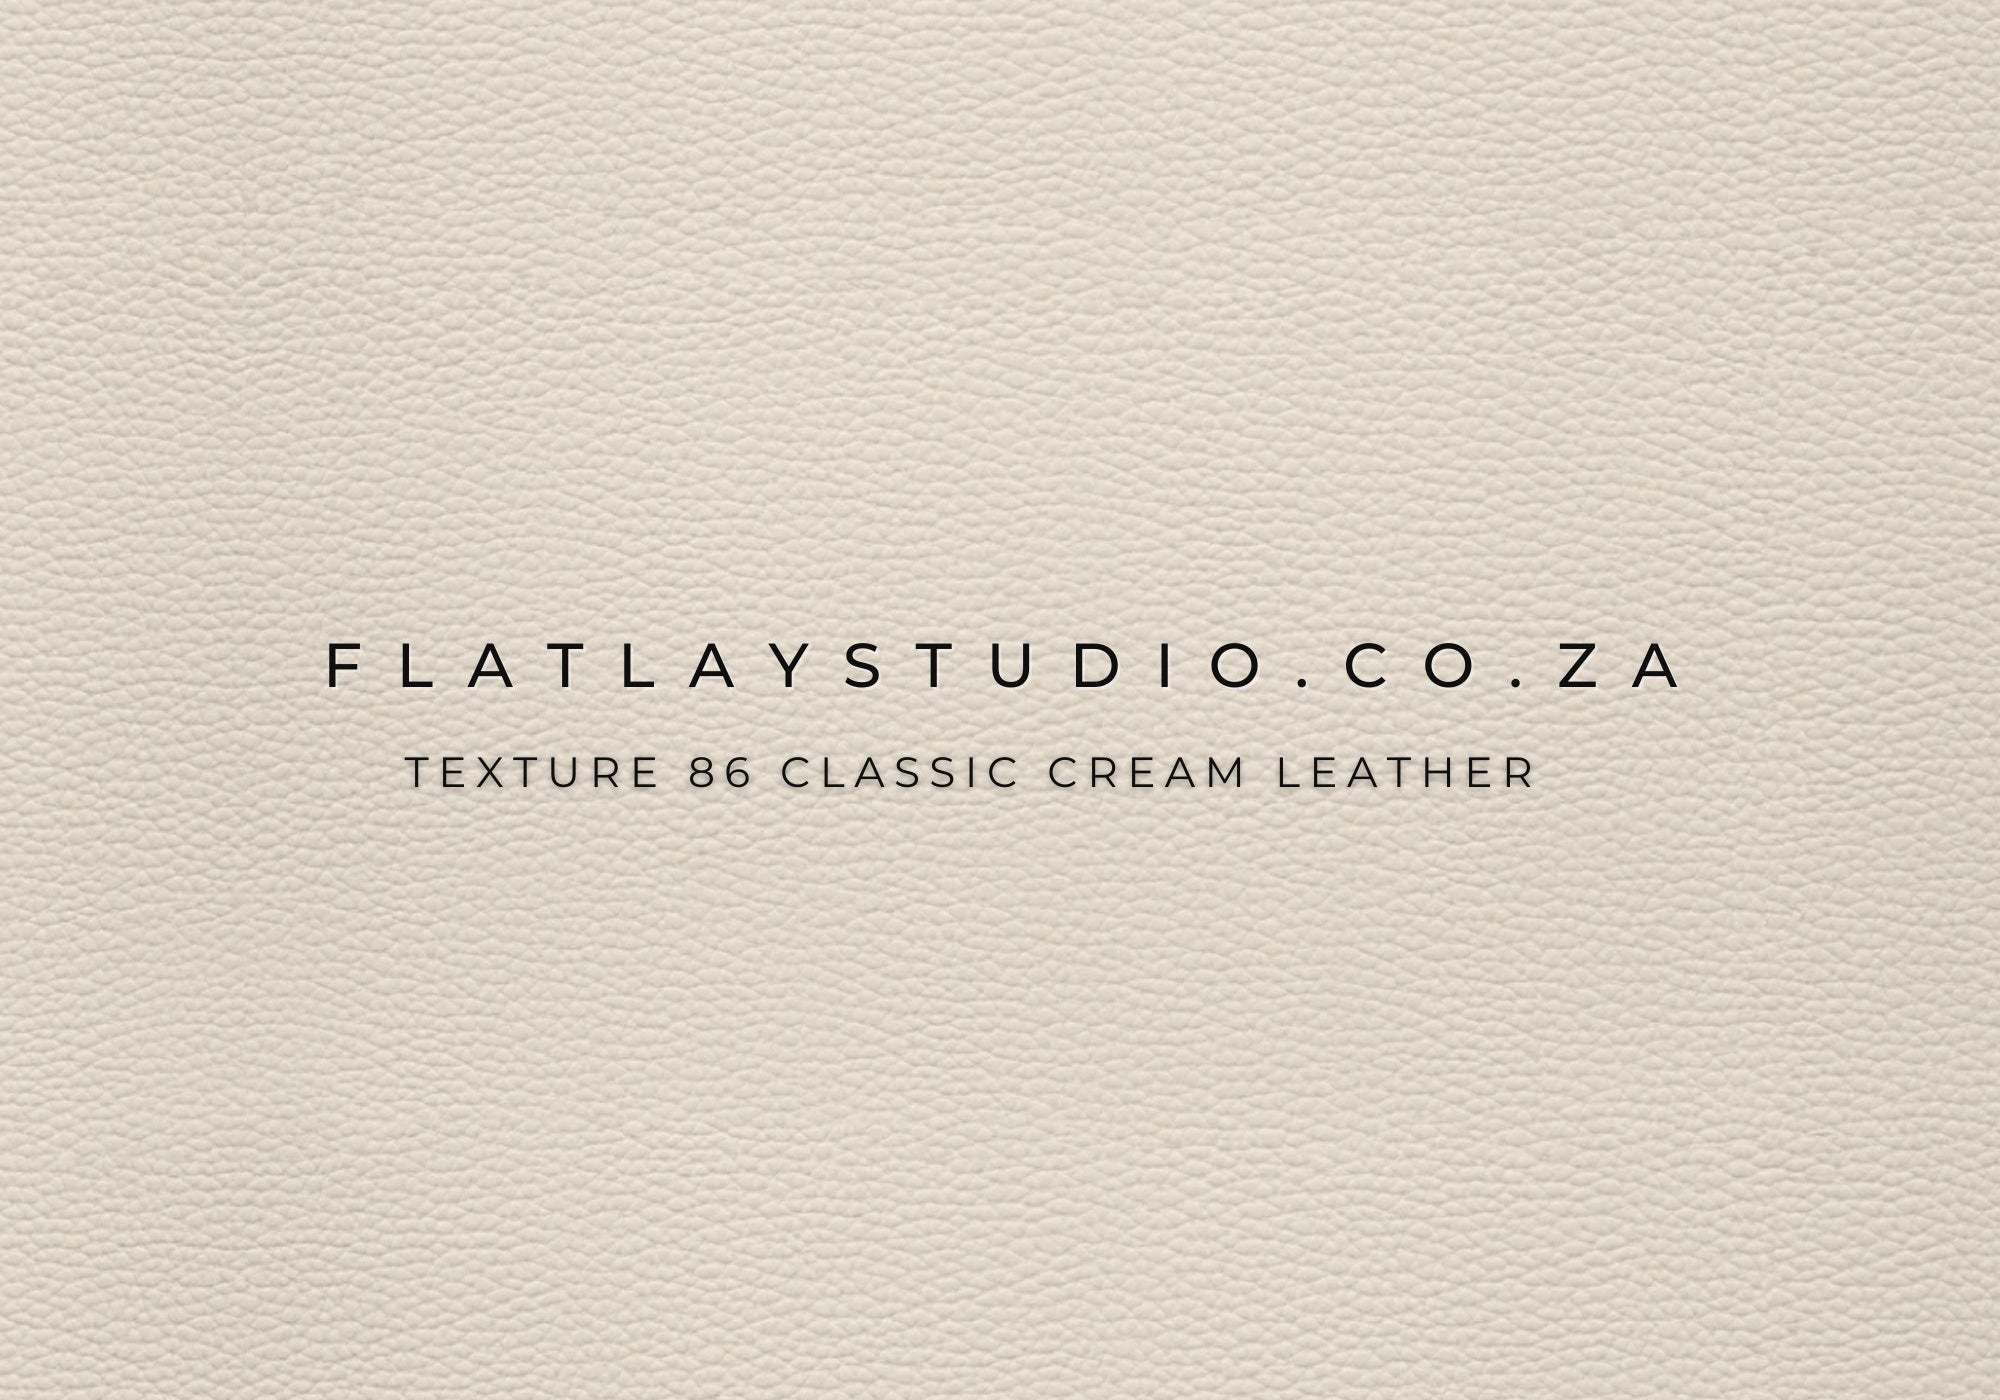 Texture 86 Classic Cream Leather - FlatlayStudio Flatlay Styling Board